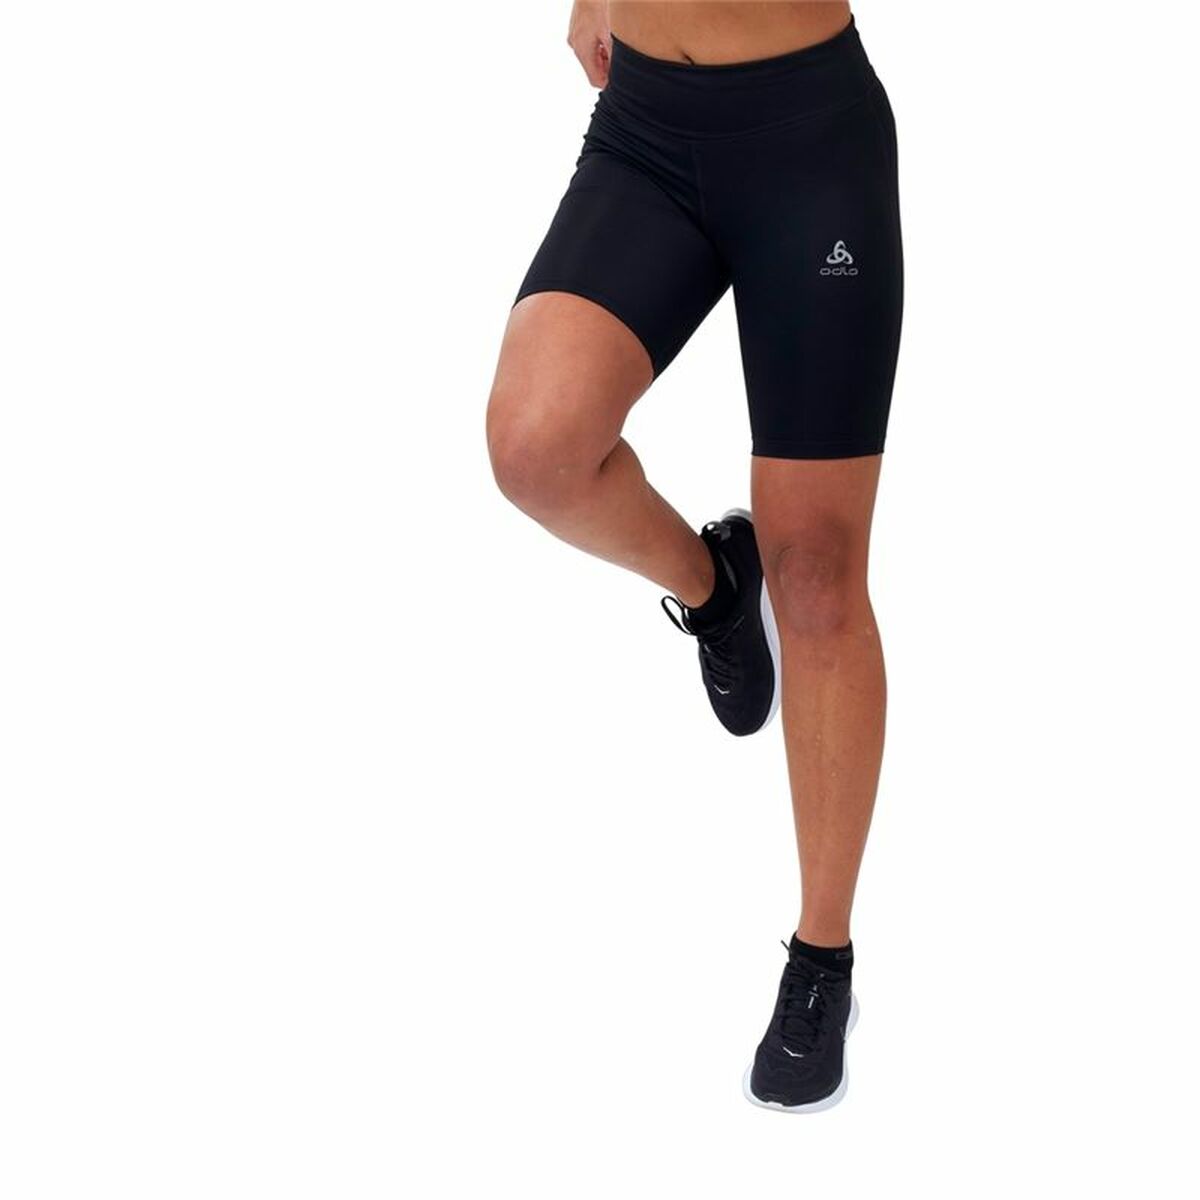 Short Sports Leggings Odlo Essential  Black